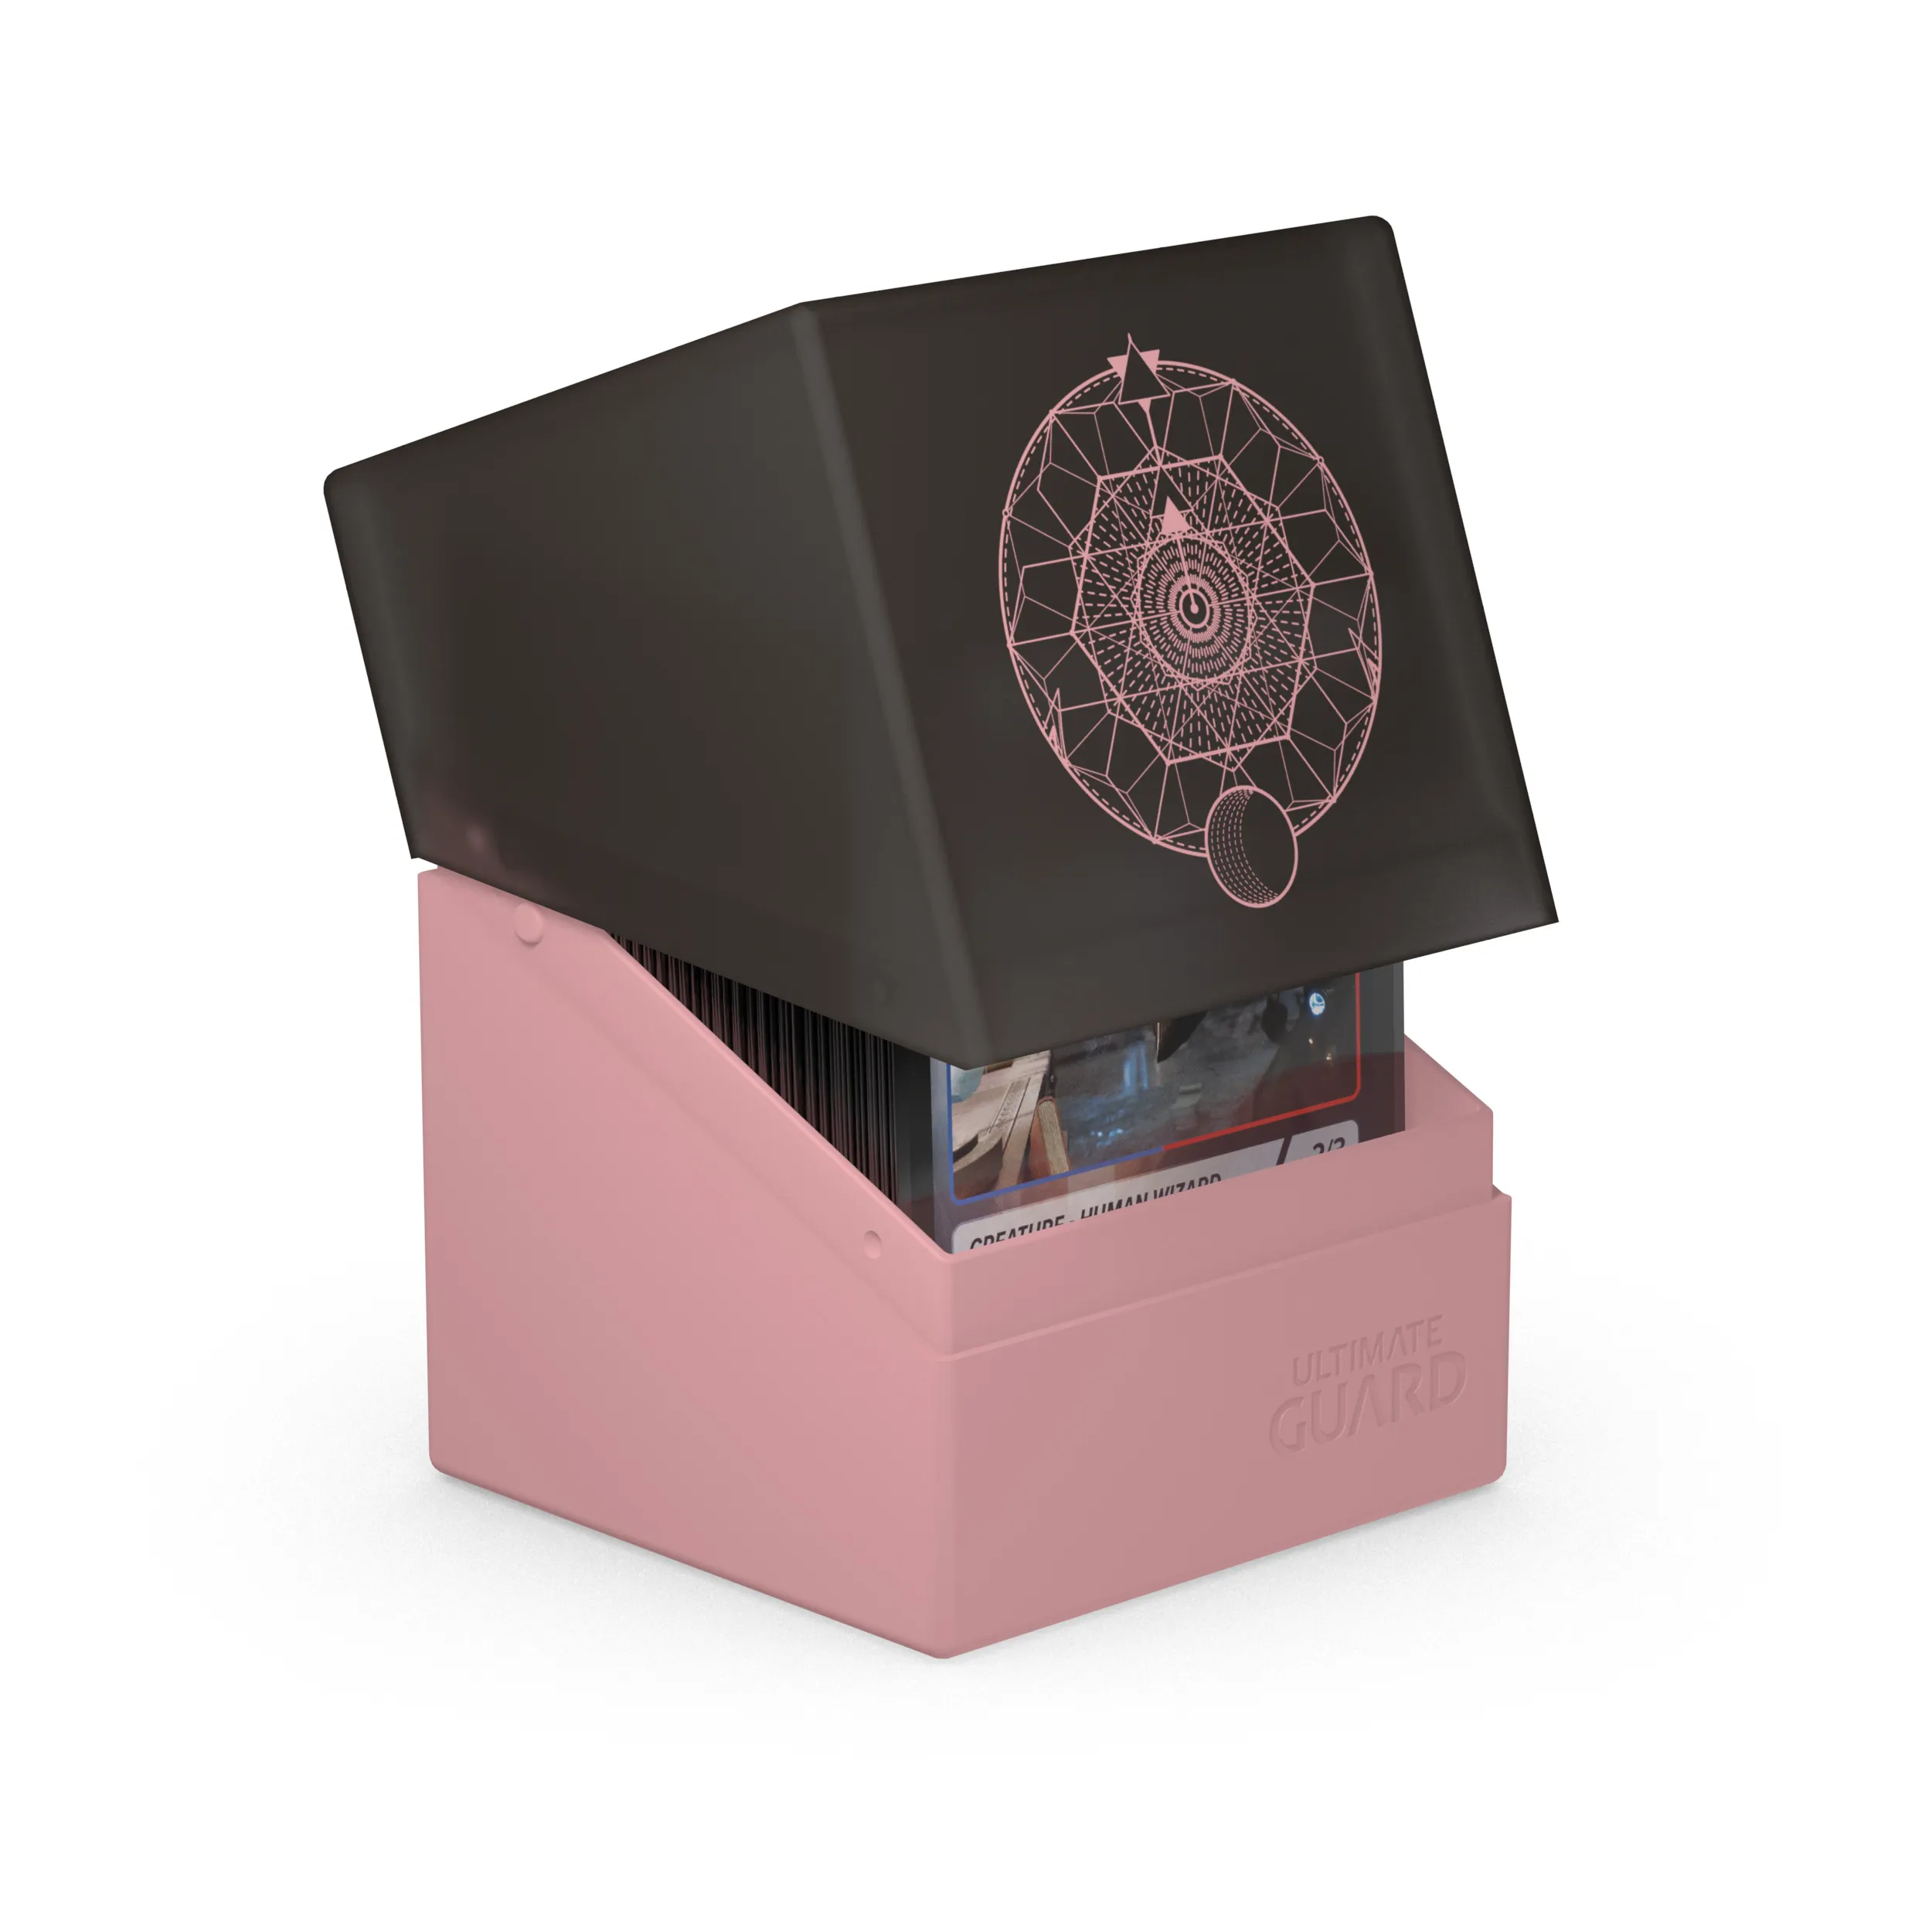 Ultimate Guard Card Deck Box Boulder 100+ Druidic Secrets Fatum (Dusty Pink)